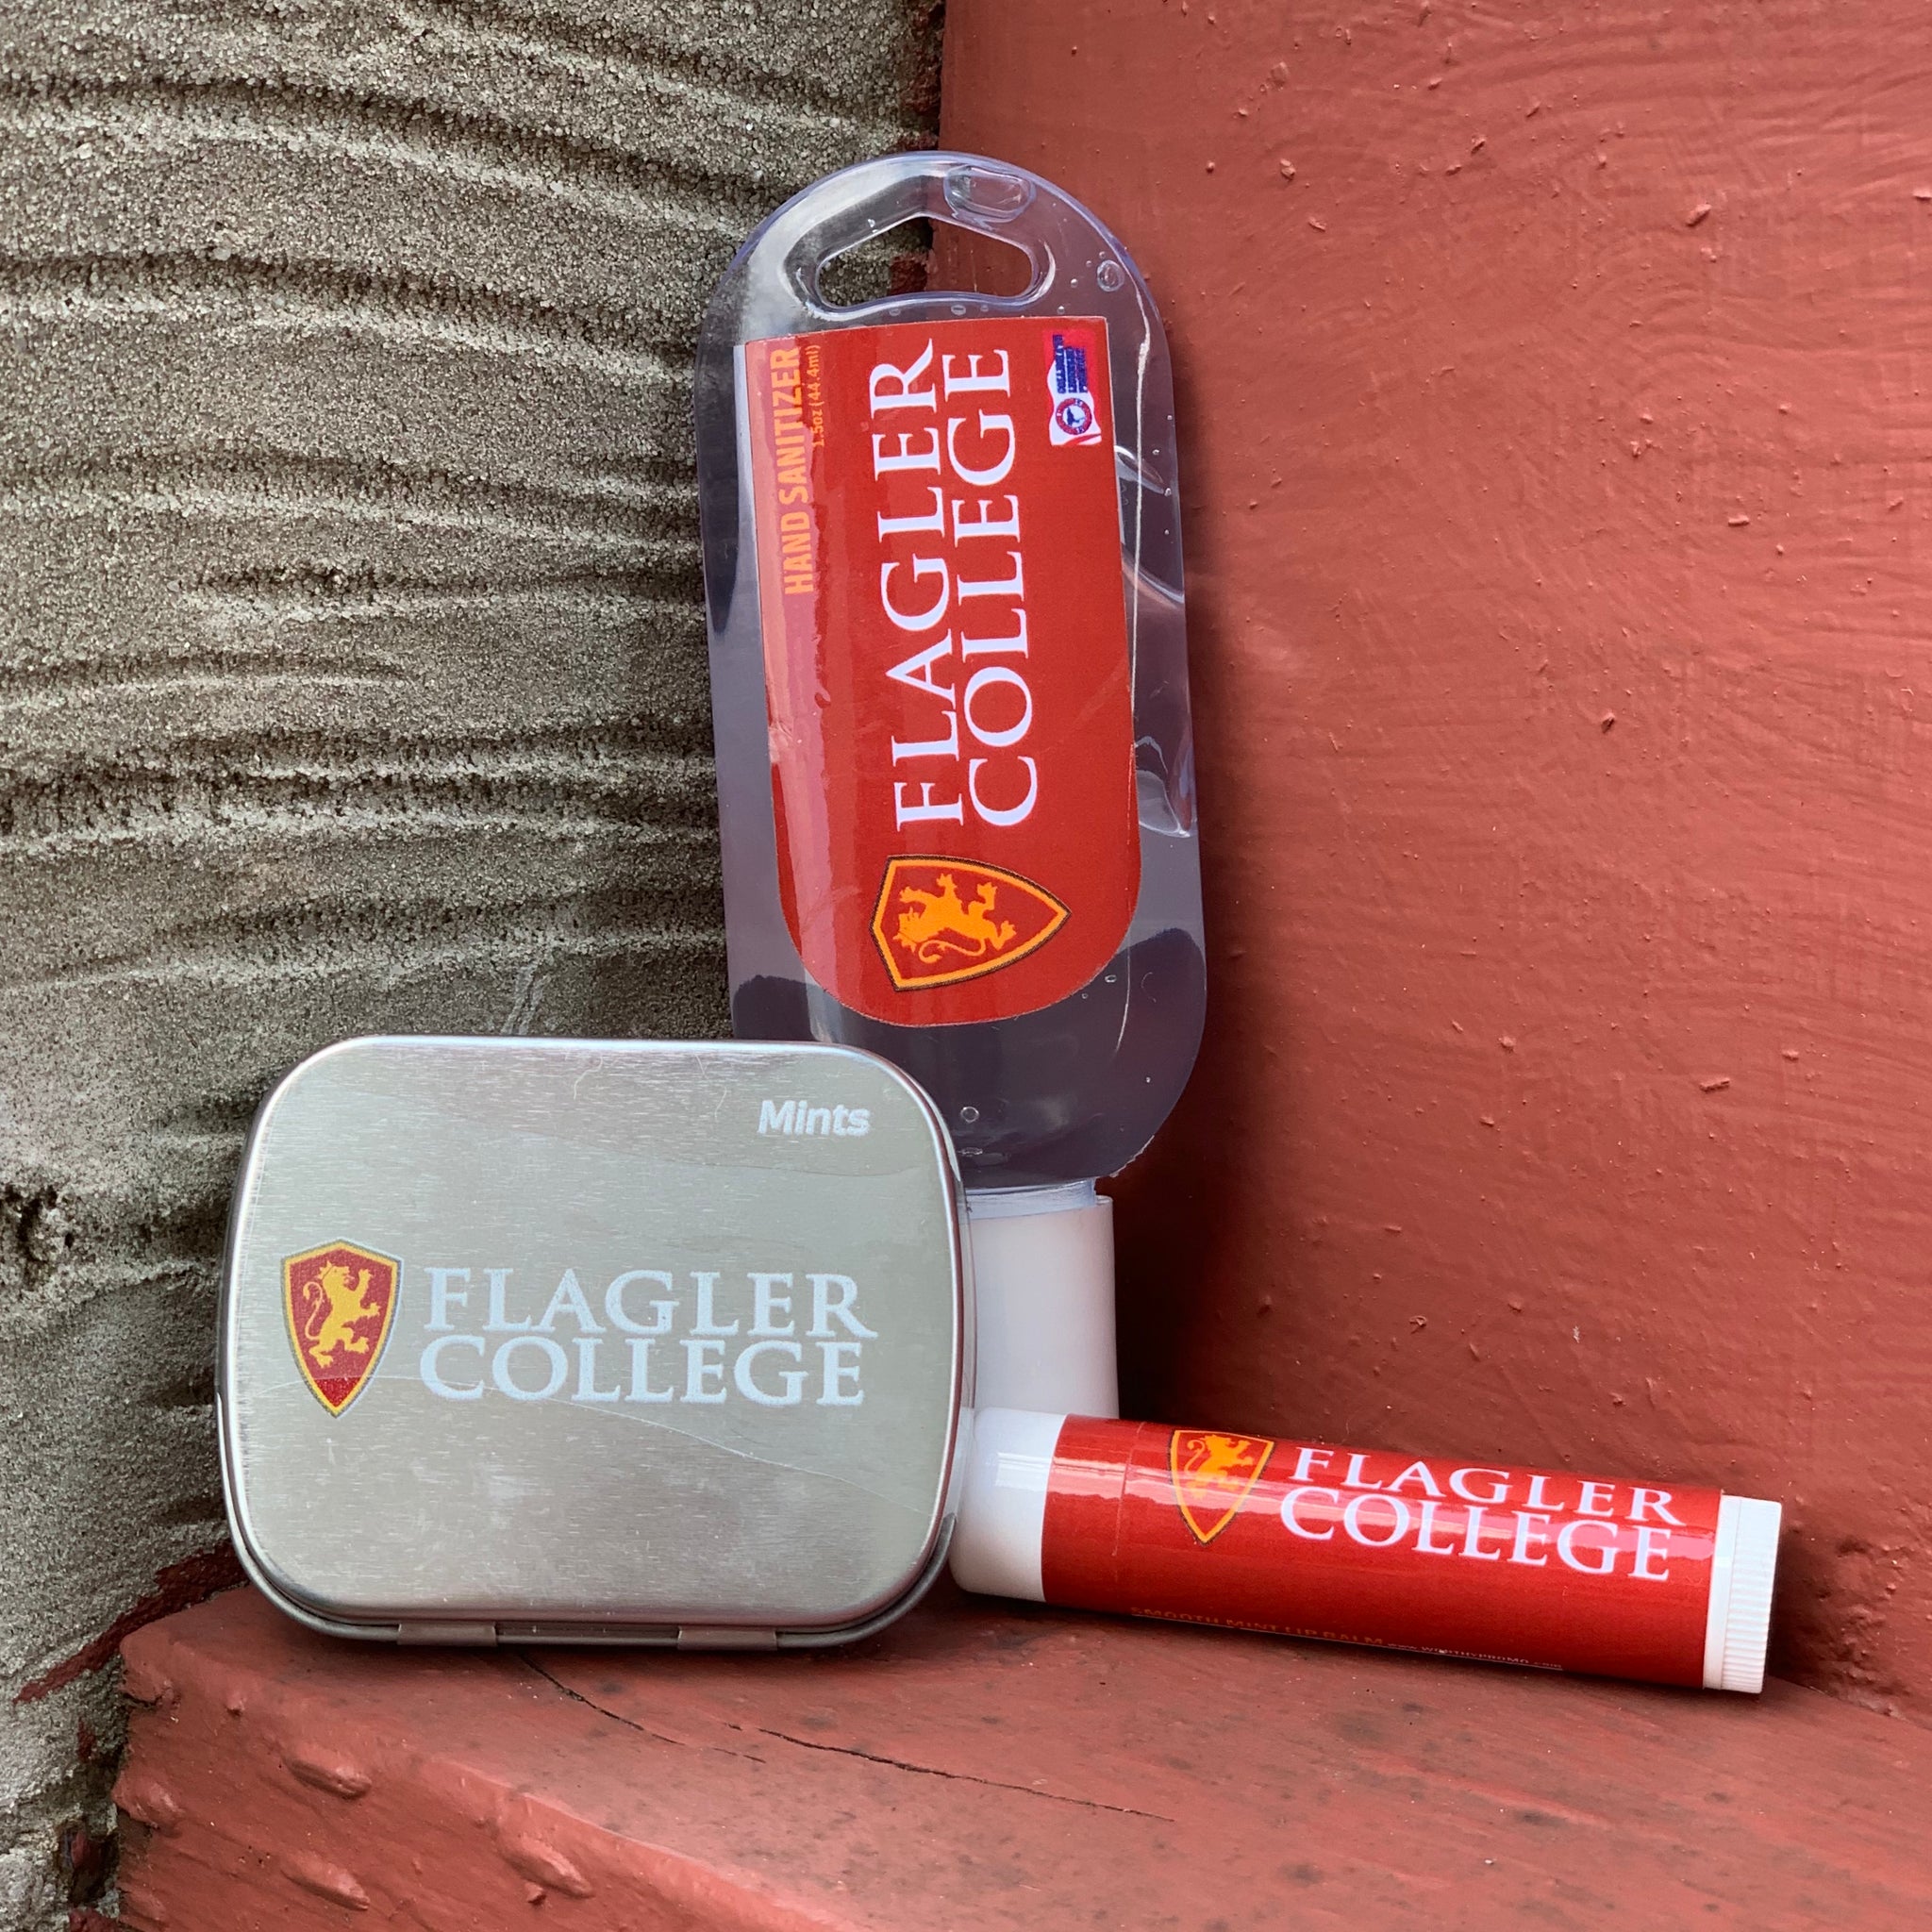 Flagler college mints, hand sanitizer, and lip balm